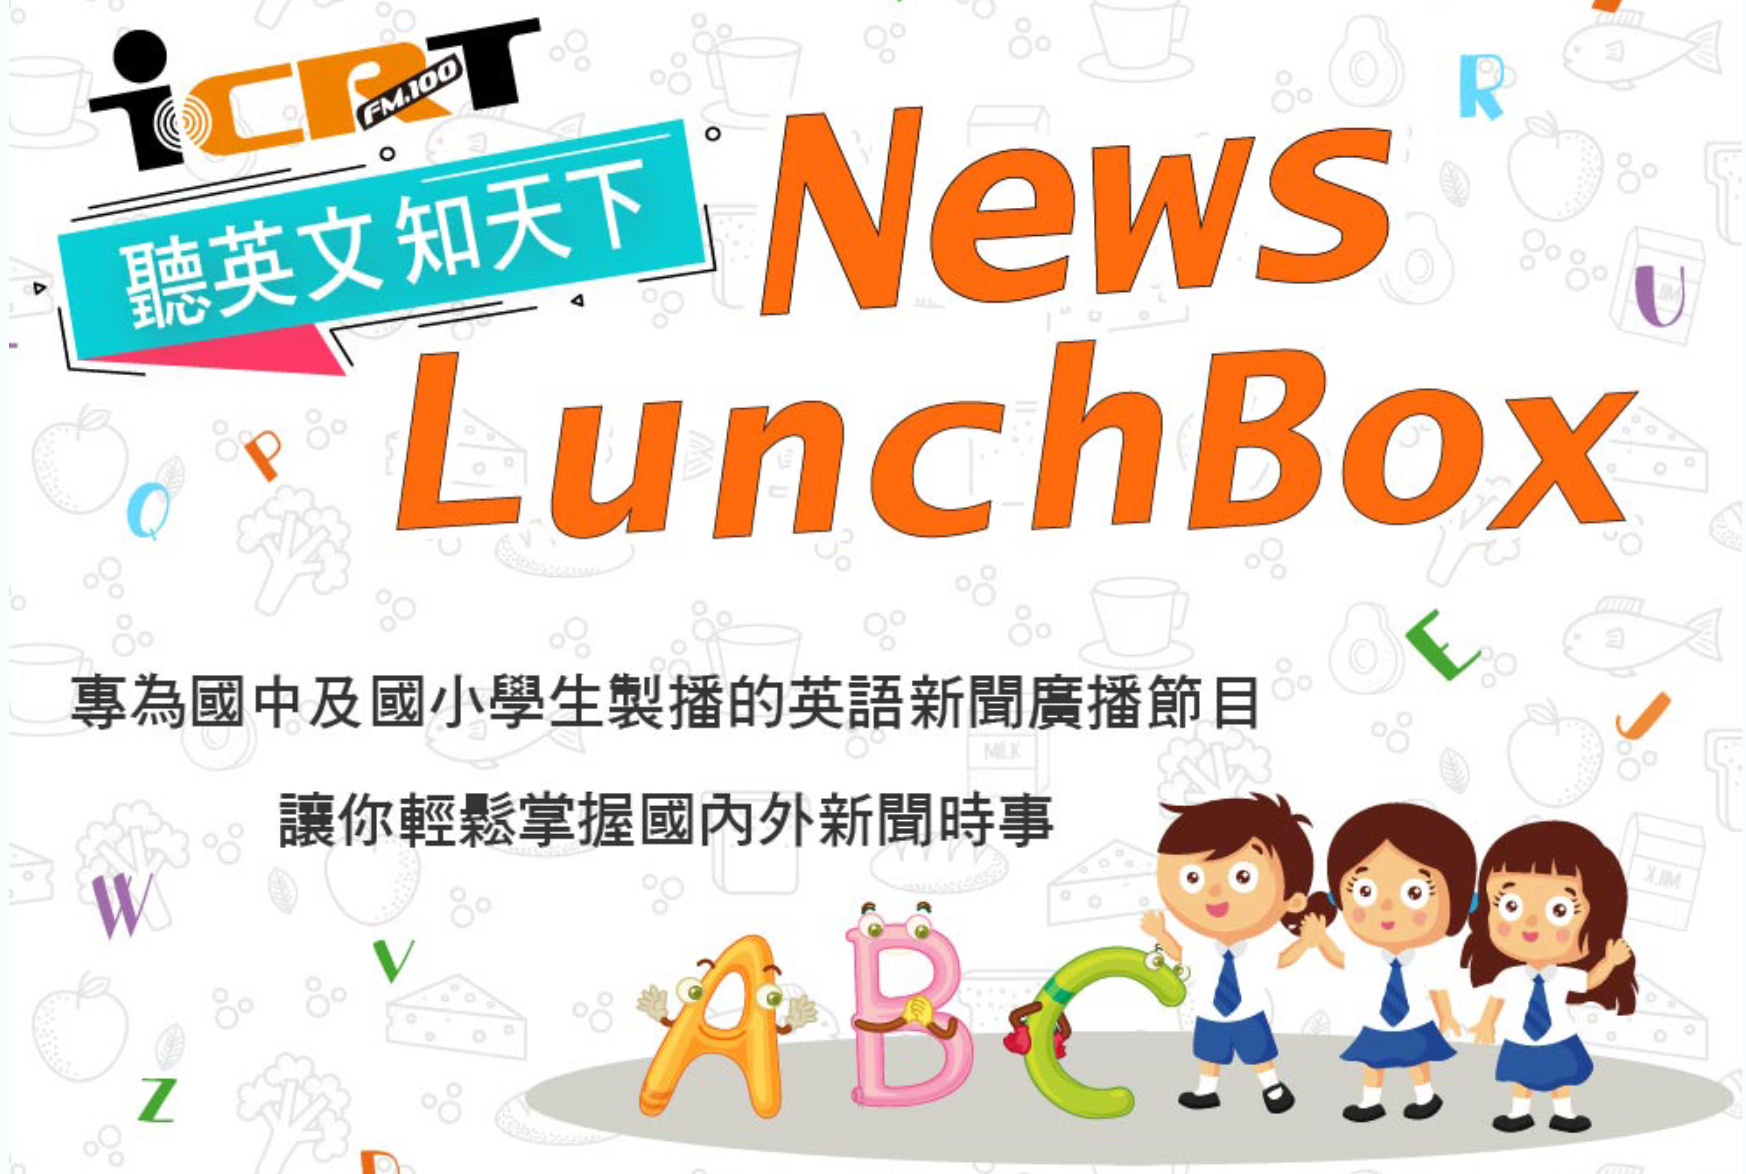 News LunchBox 讓你輕鬆掌握國內外新聞時事